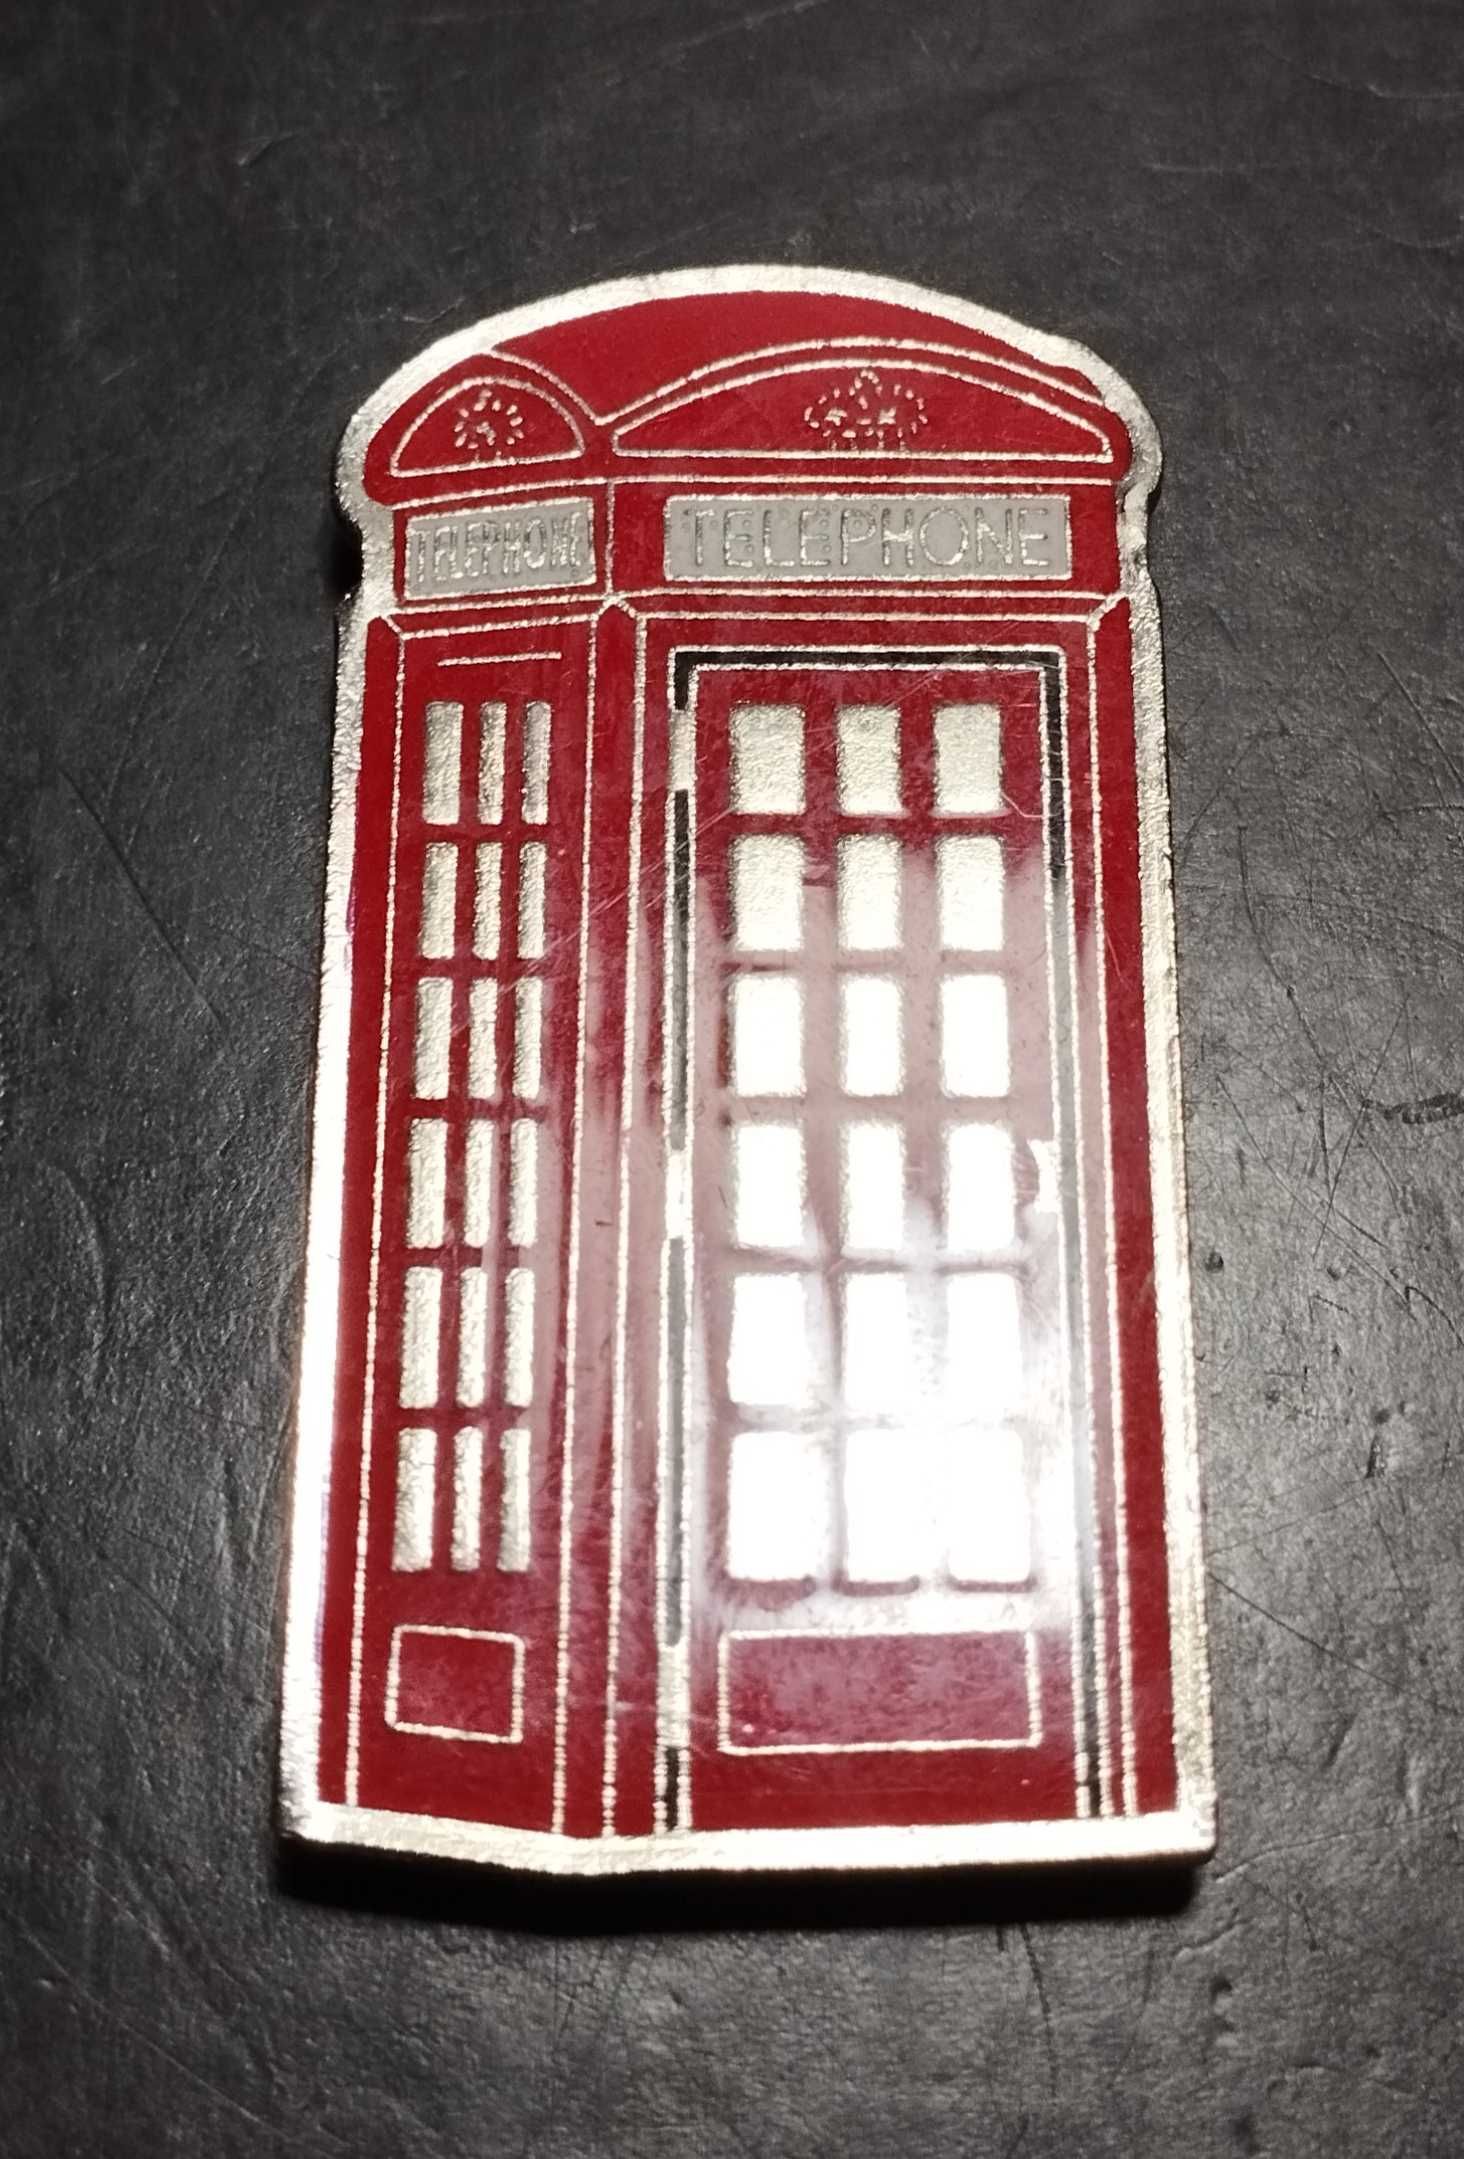 Металл, фигурка, сувенир, магнит "Телефонная будка", Англия, винтаж